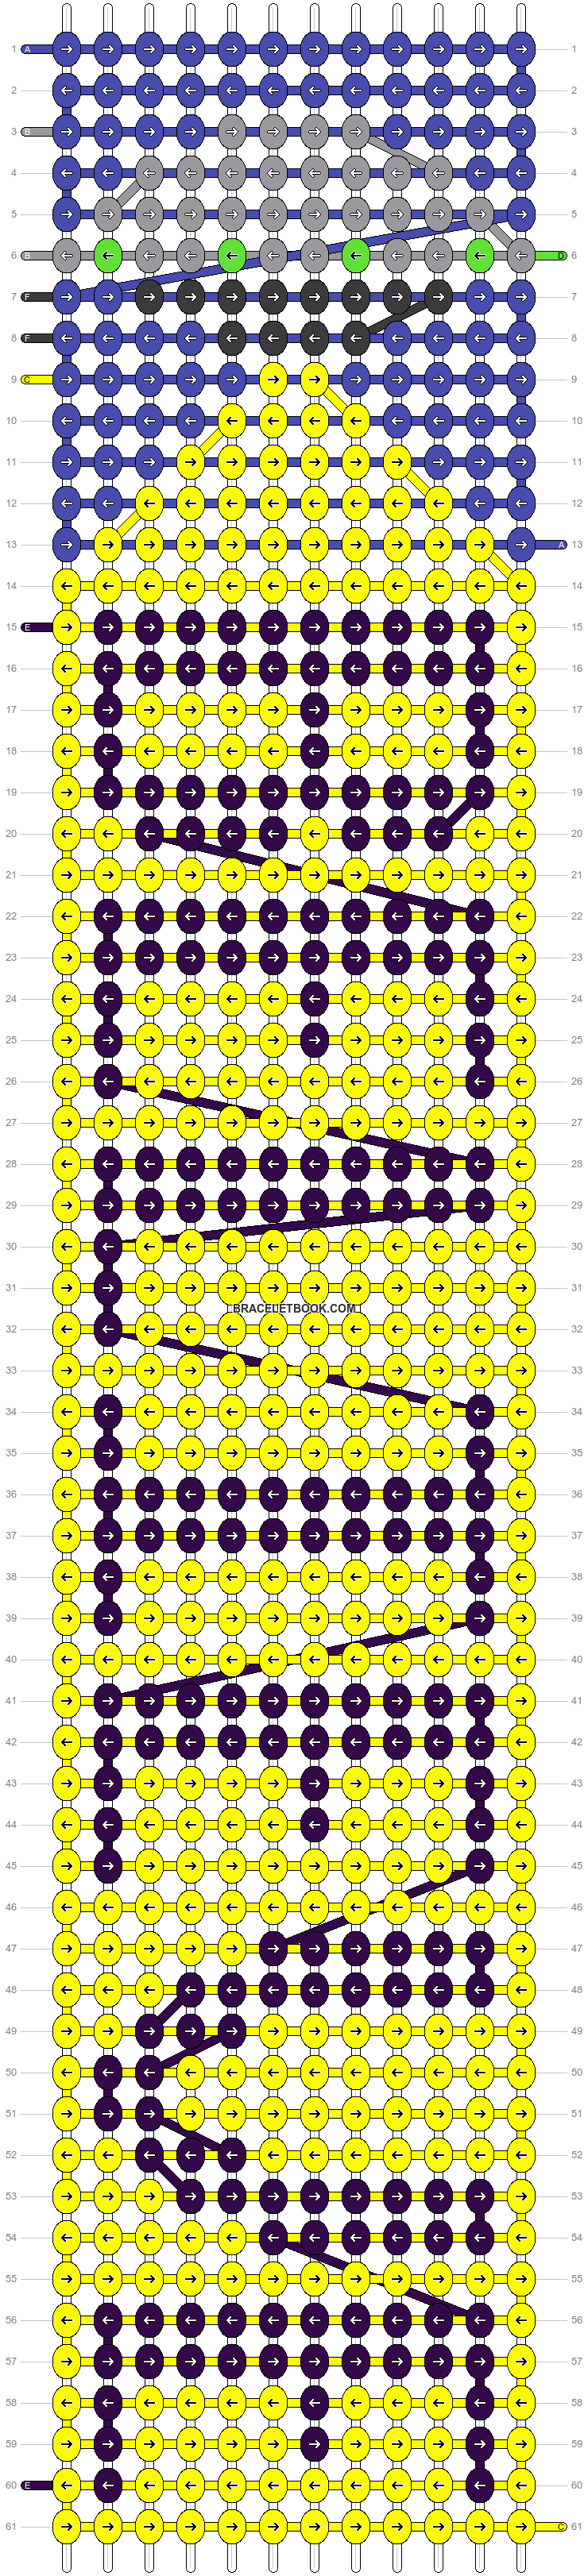 Alpha pattern #15130 pattern